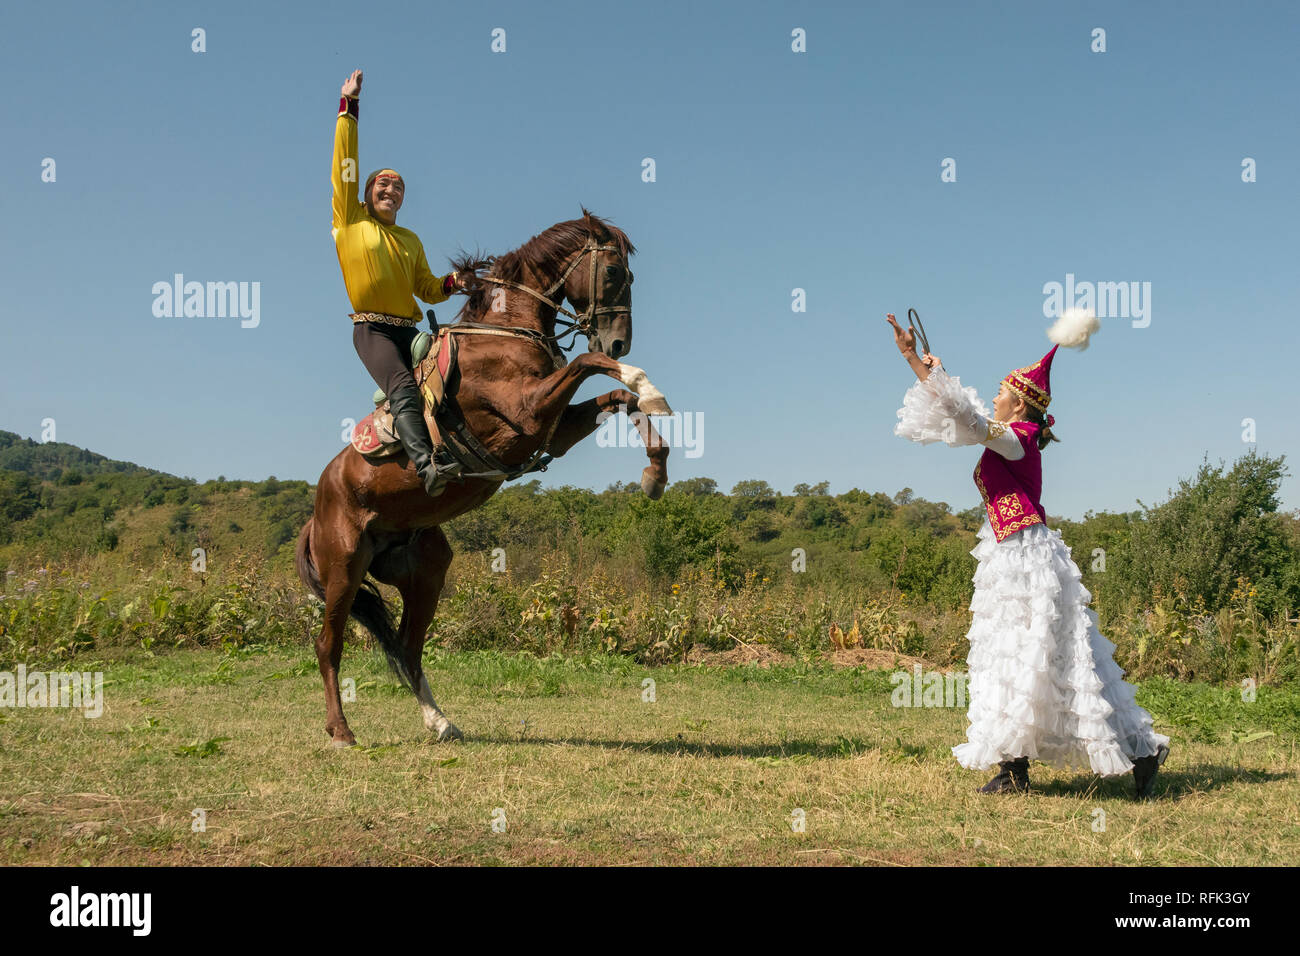 Kazakh man and woman teaming up with rearing horse, Almaty Kazakhstan Stock Photo